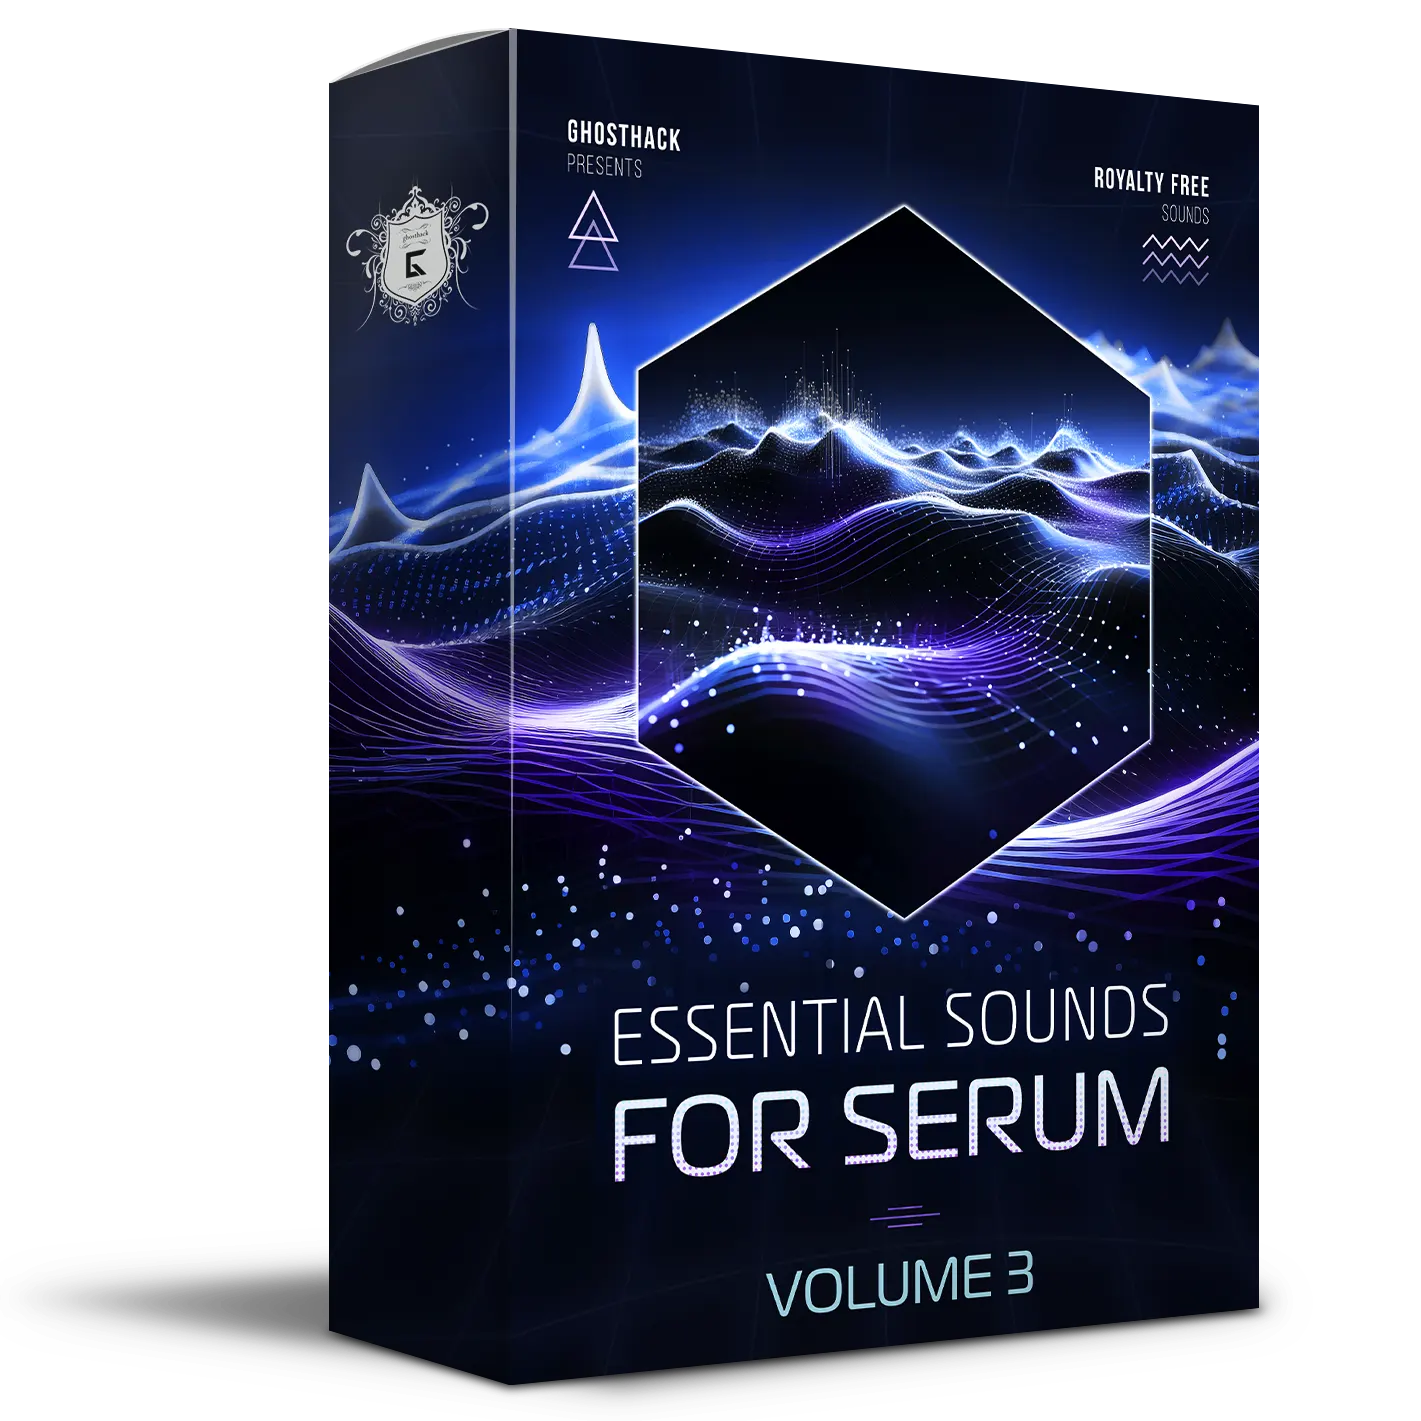 Essential Sounds for Serum Volume 3